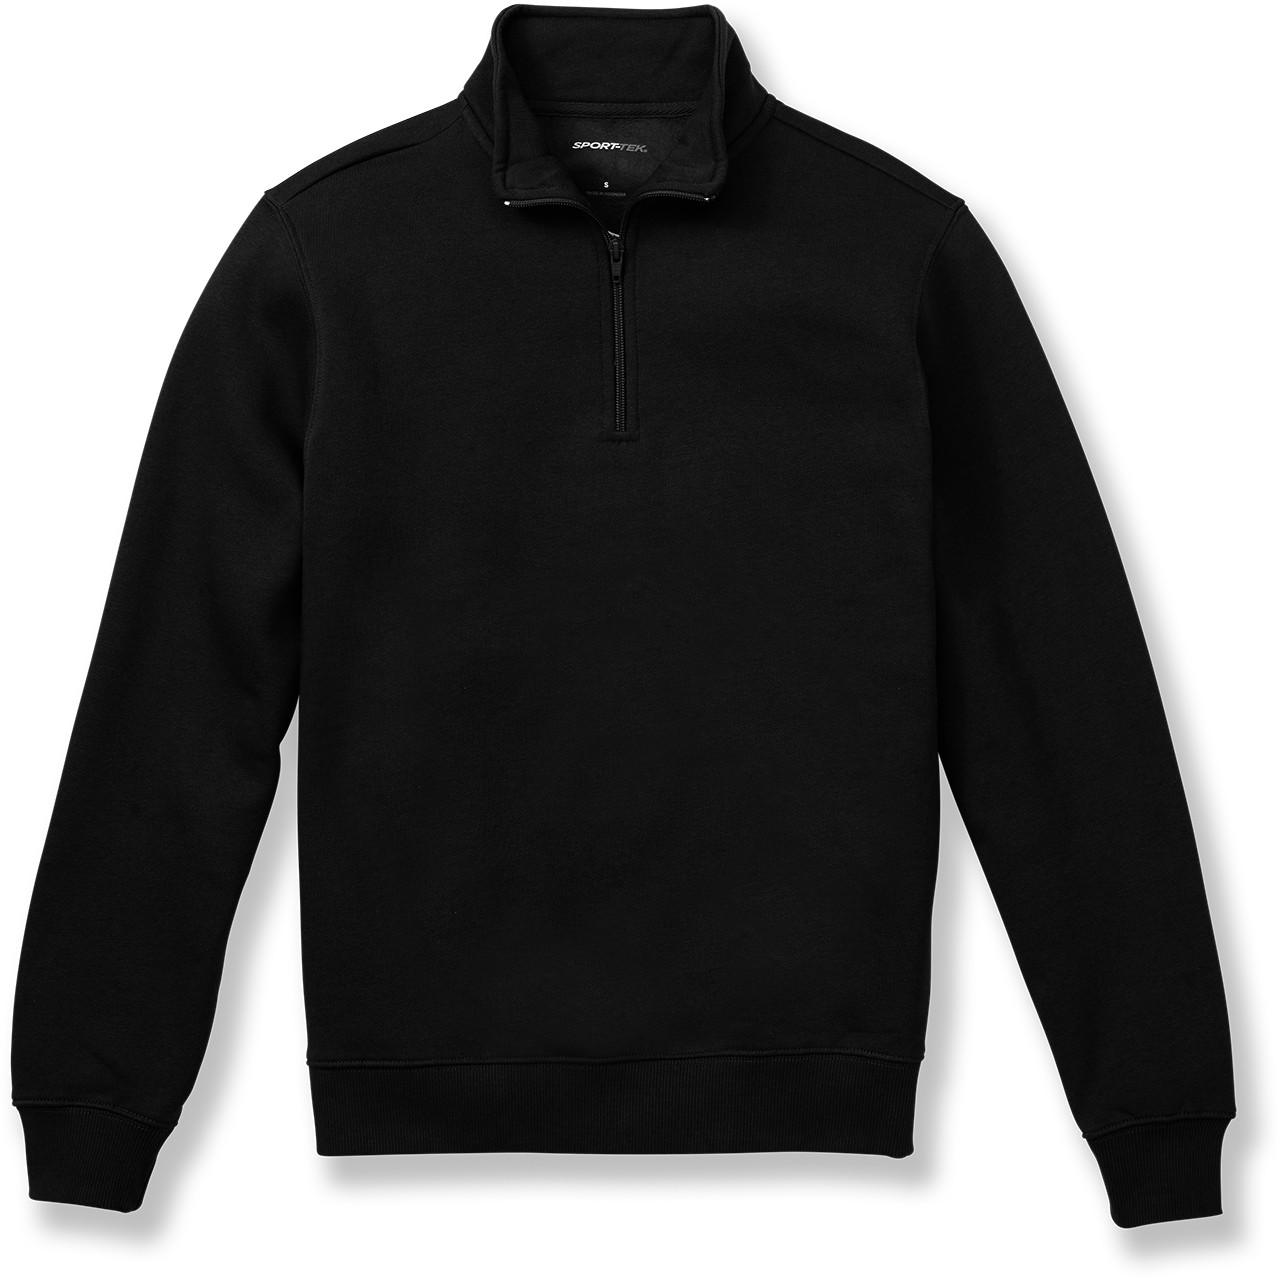 1/4 Zip Sweatshirt with heat transferred logo [NJ249-ST253PCT-BLACK] -  FlynnO'Hara Uniforms